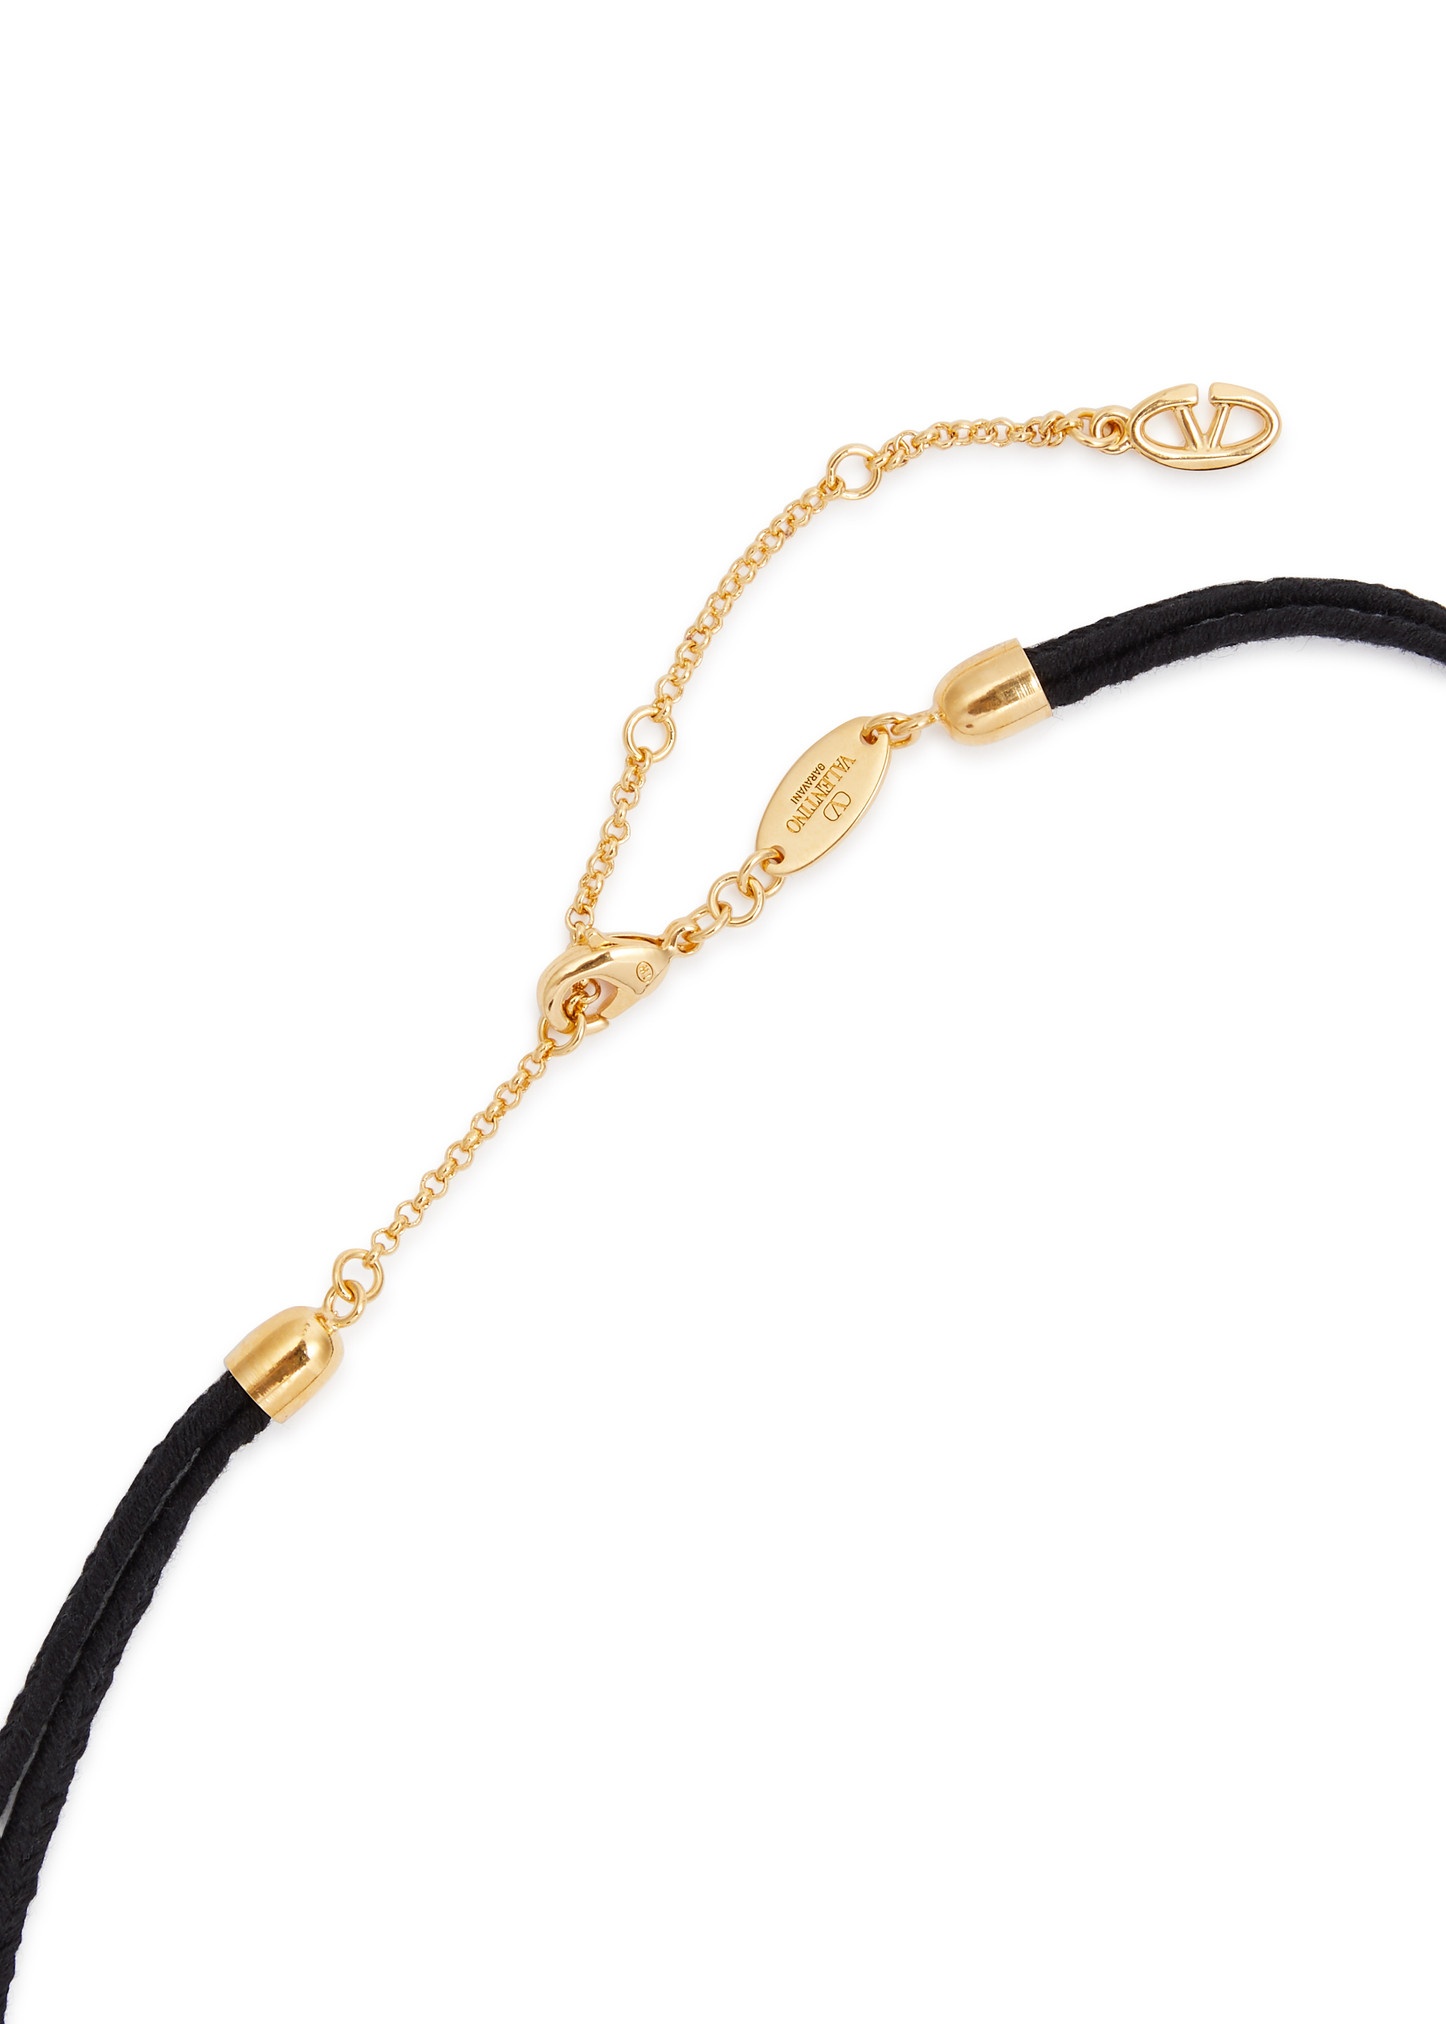 VLogo rope necklace - 4